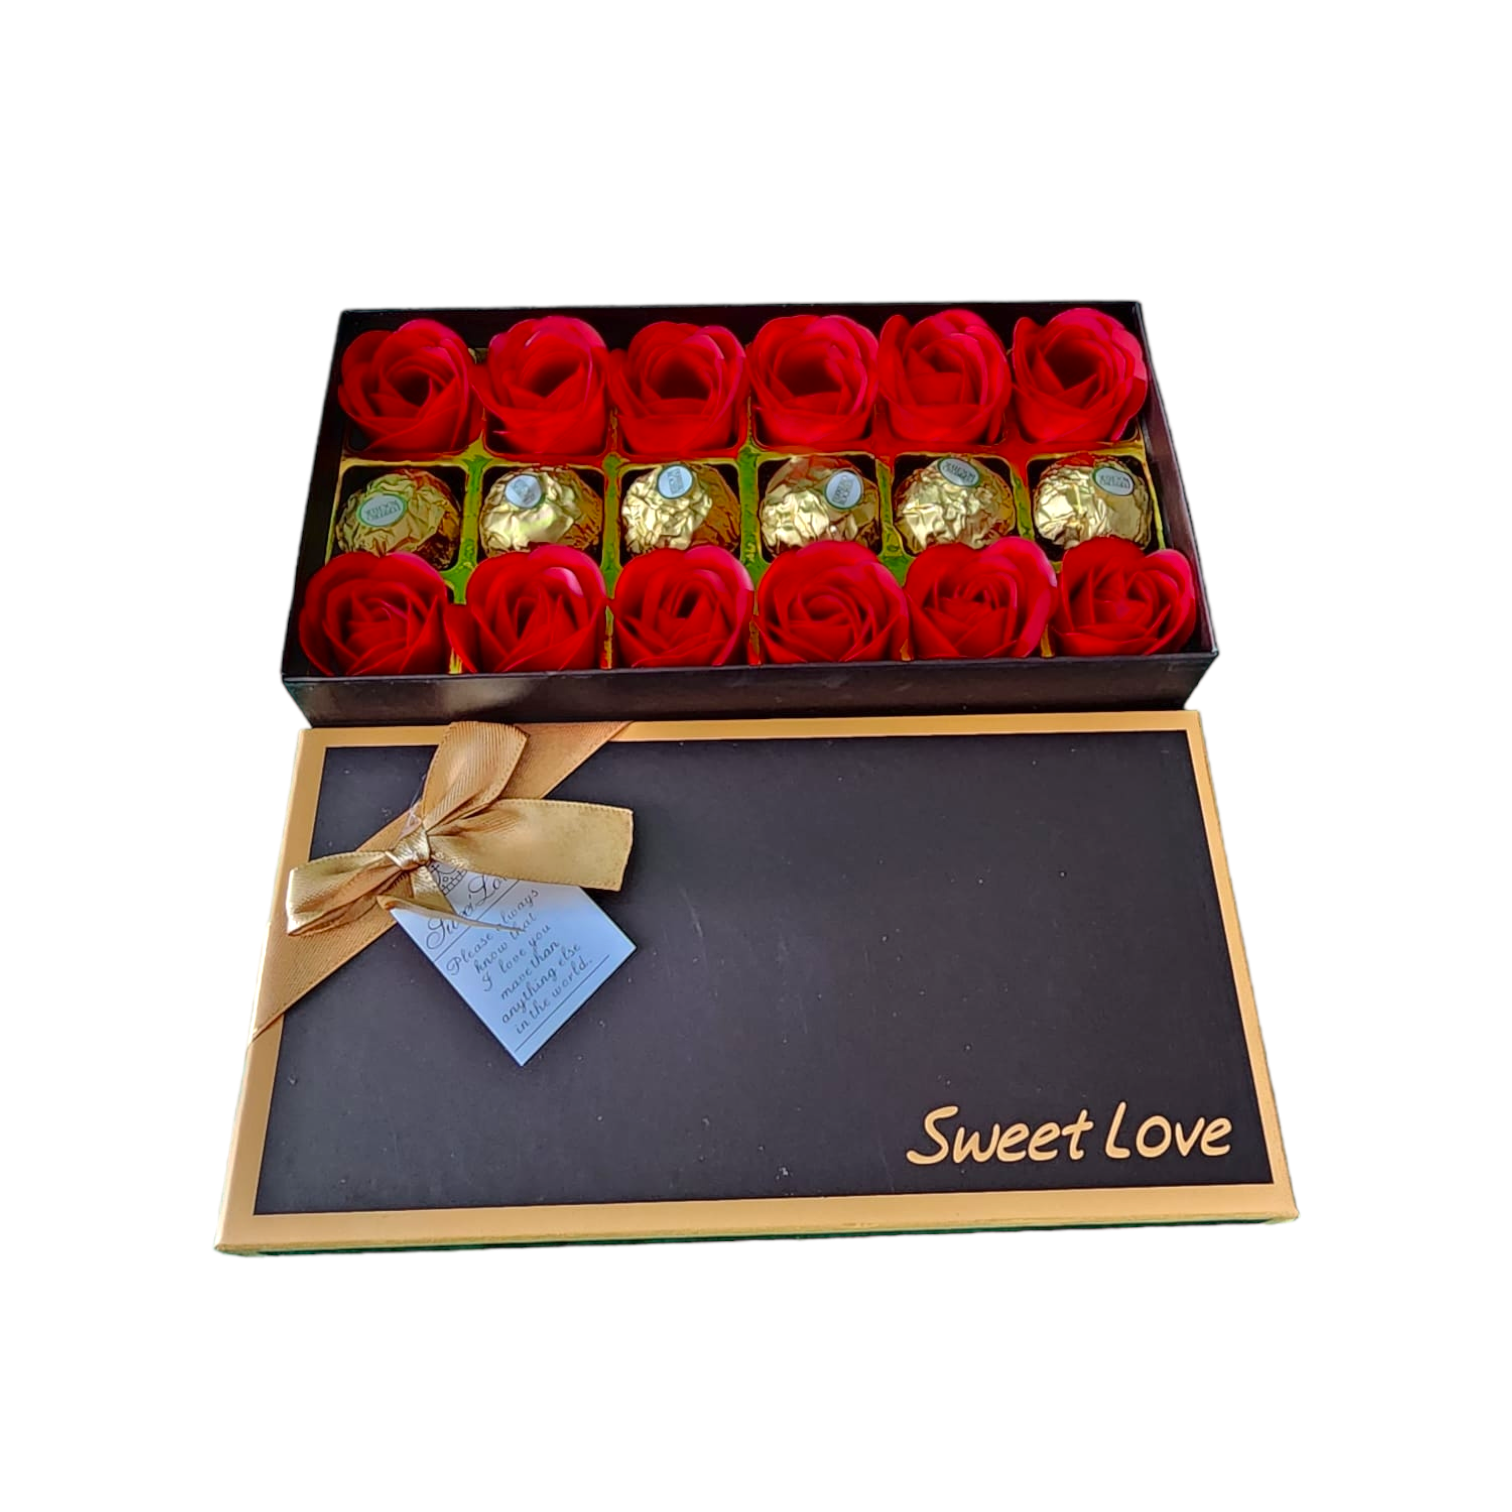 Sweet love box